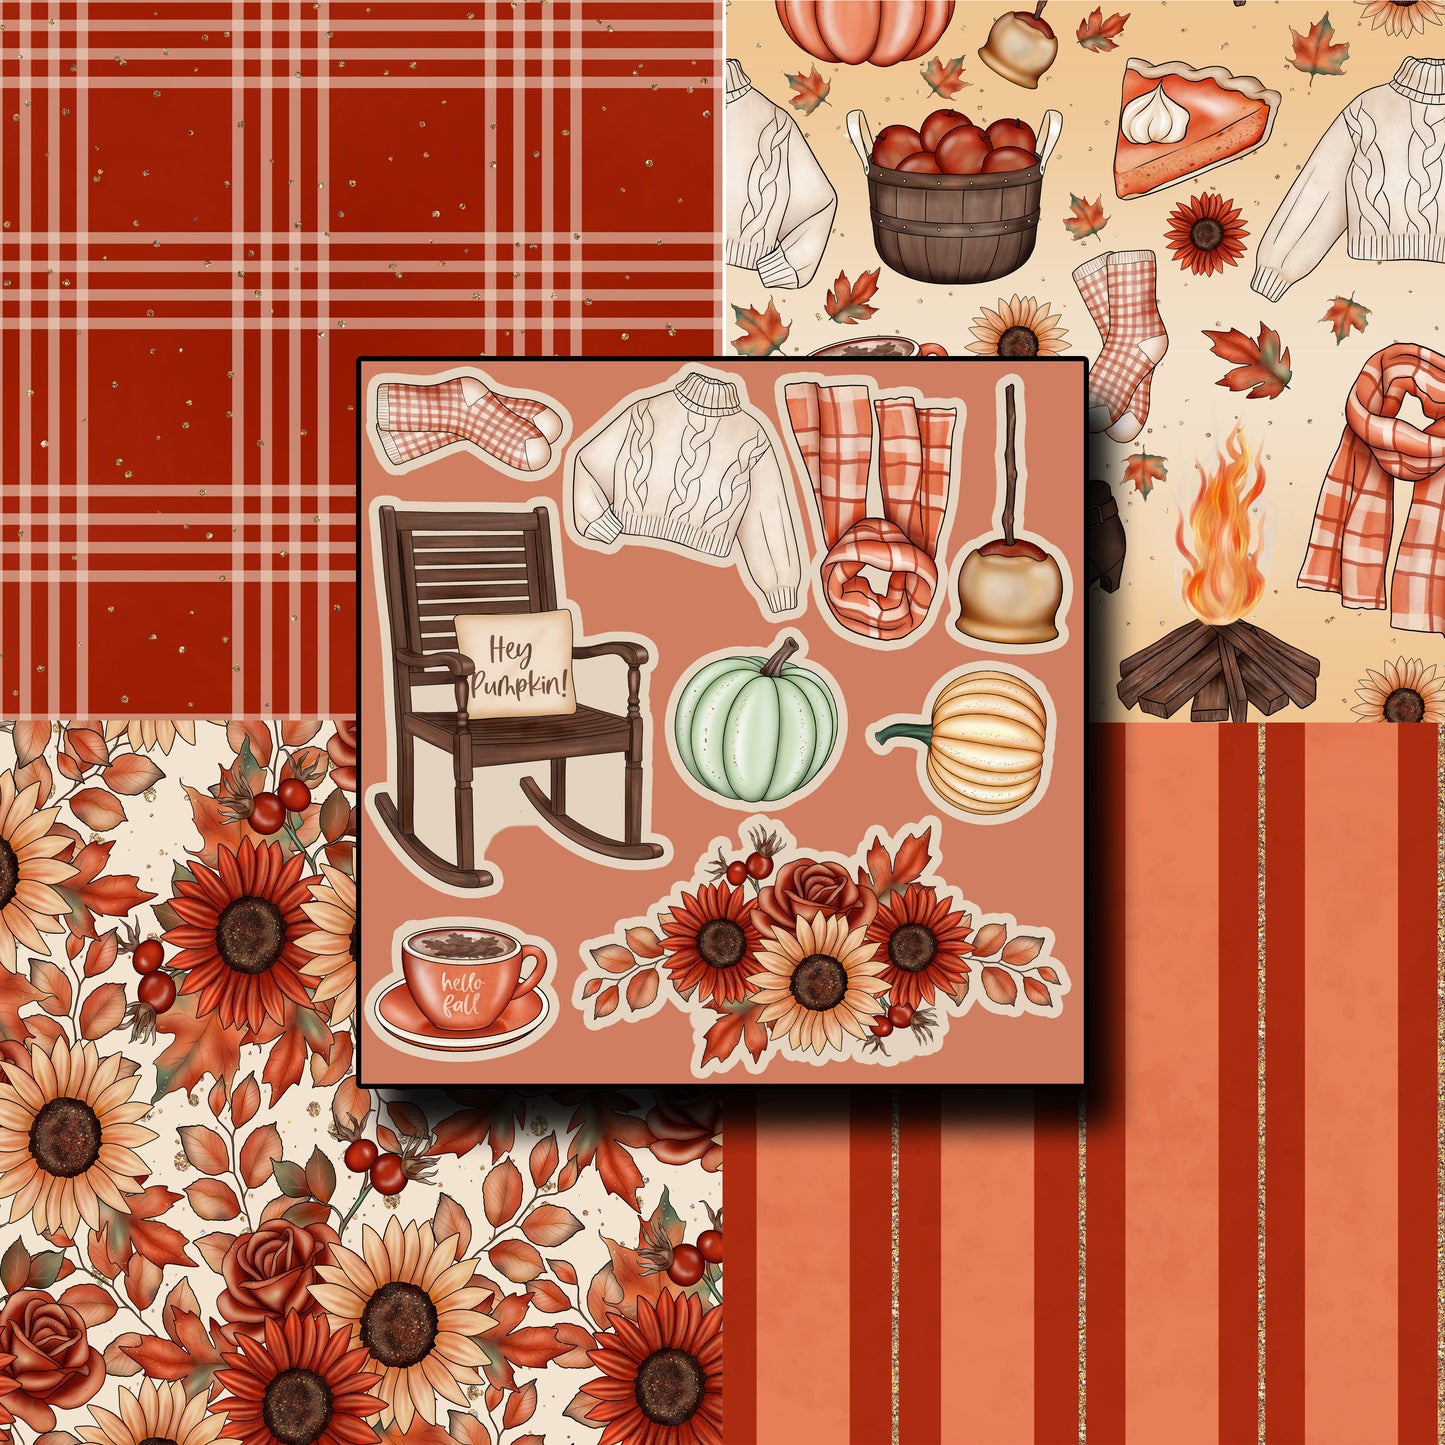 Autumn Favorites Scrapbook Kit - 8124